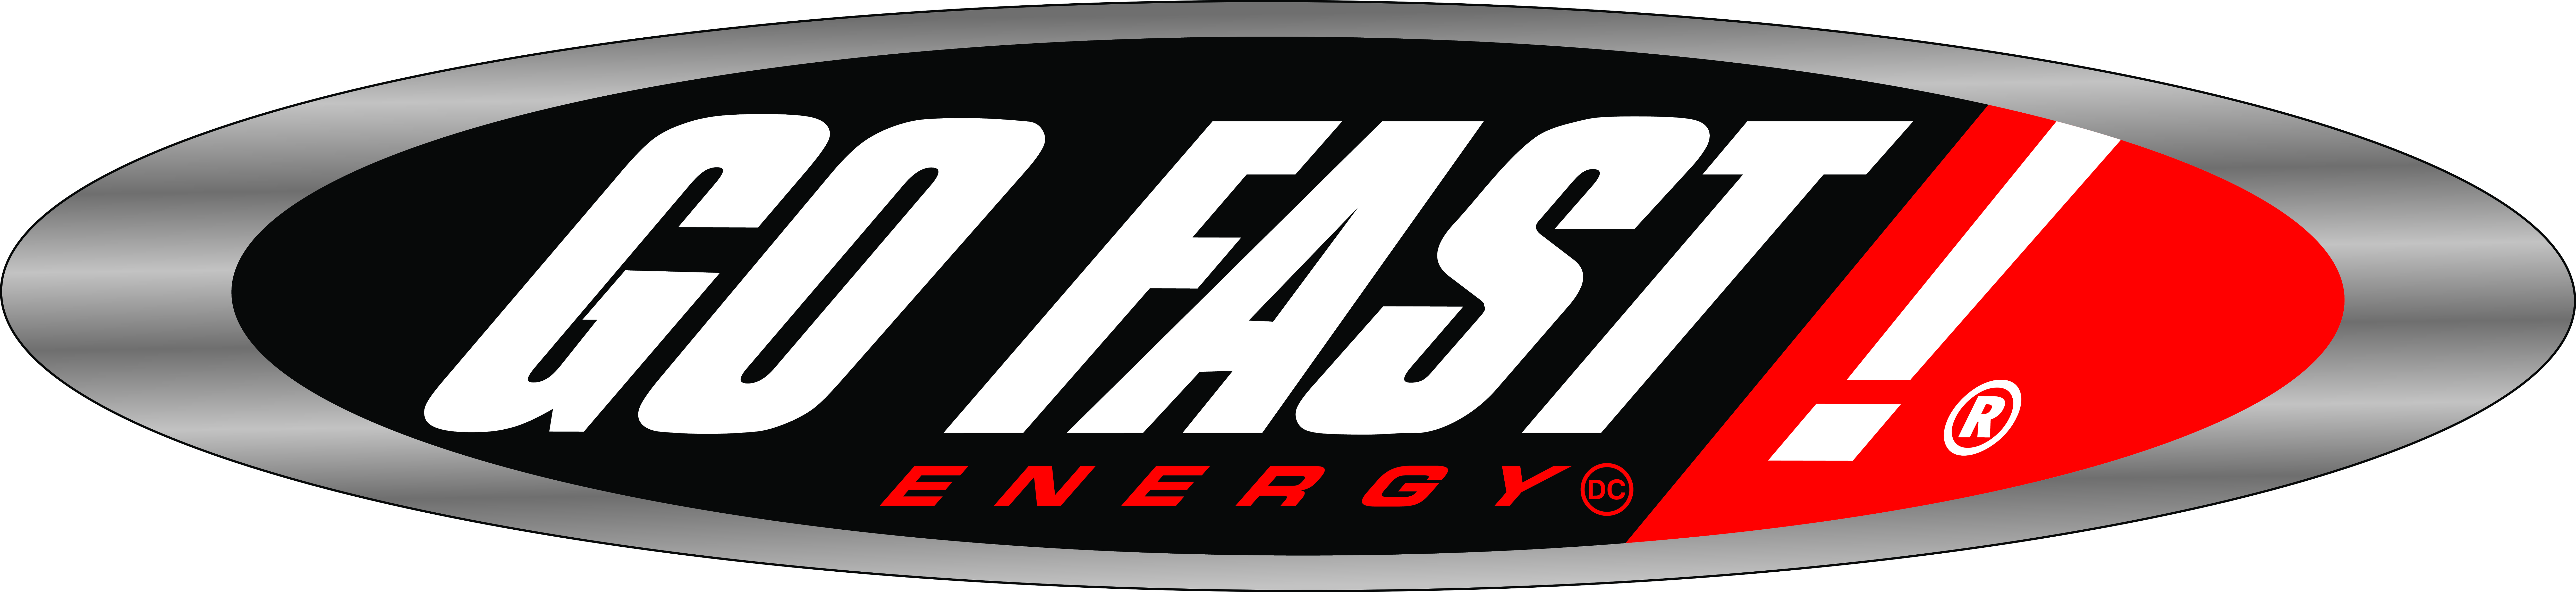 Go Fast Energy